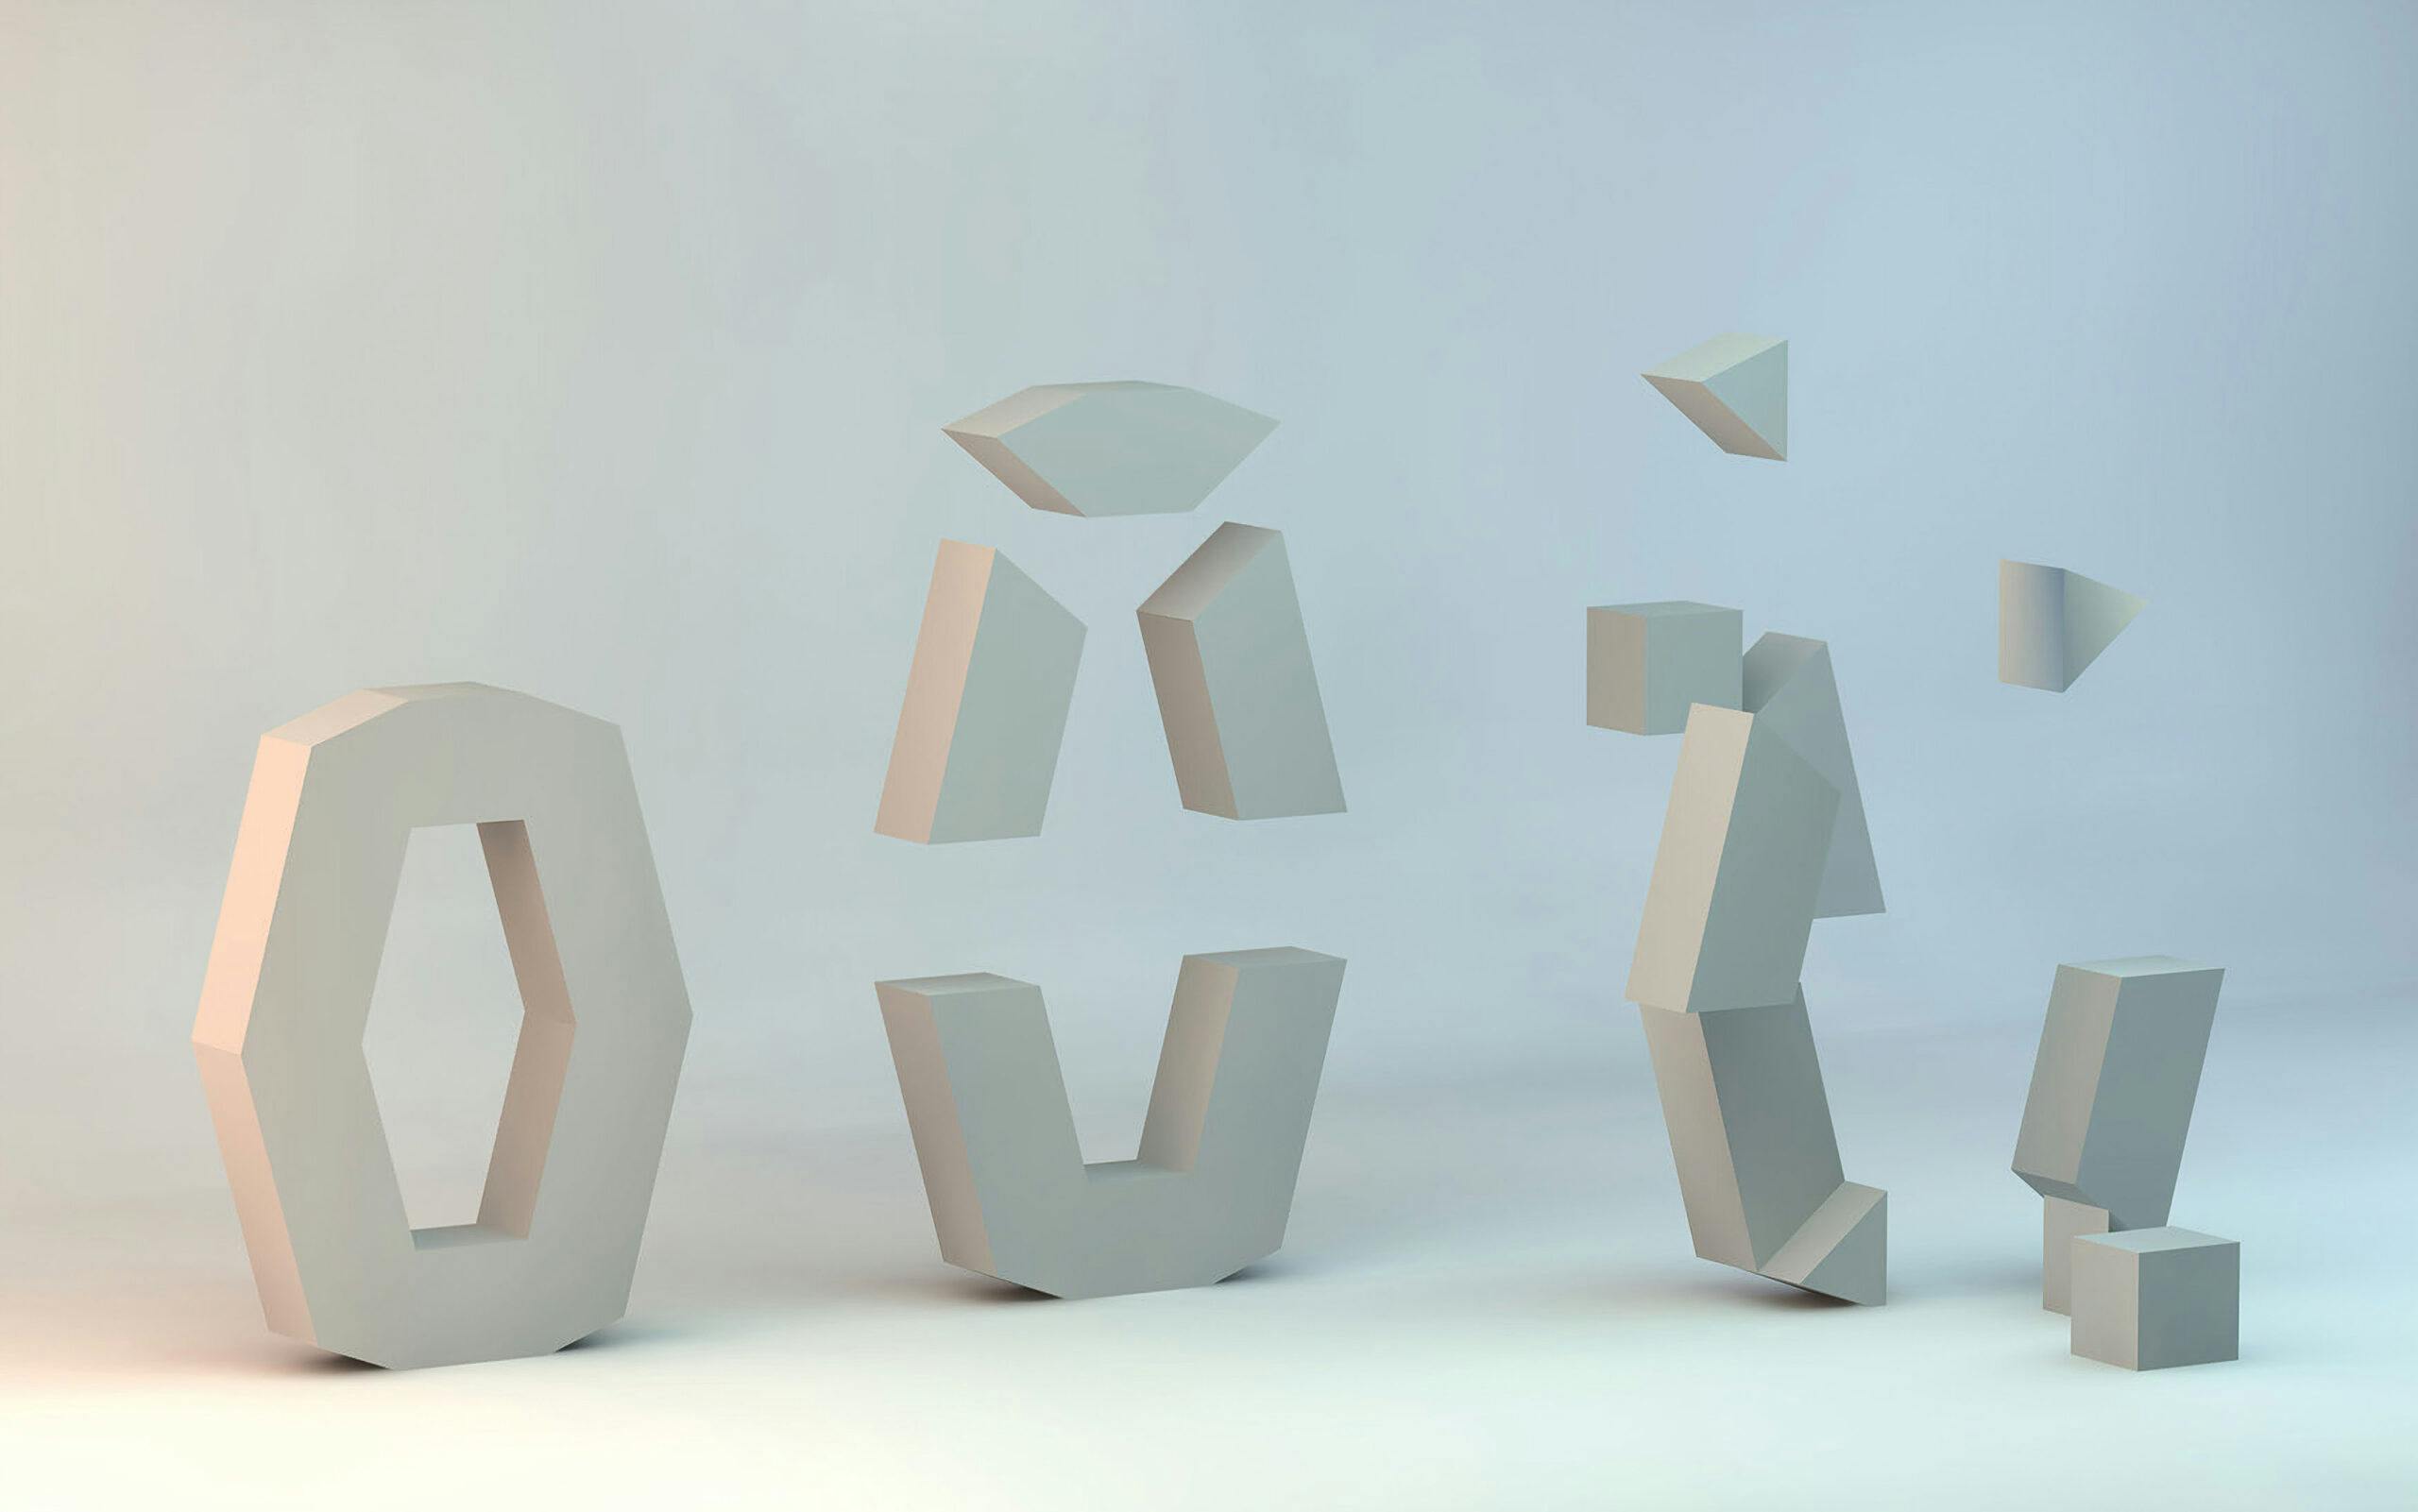 The idea - modular system of geometric shapes